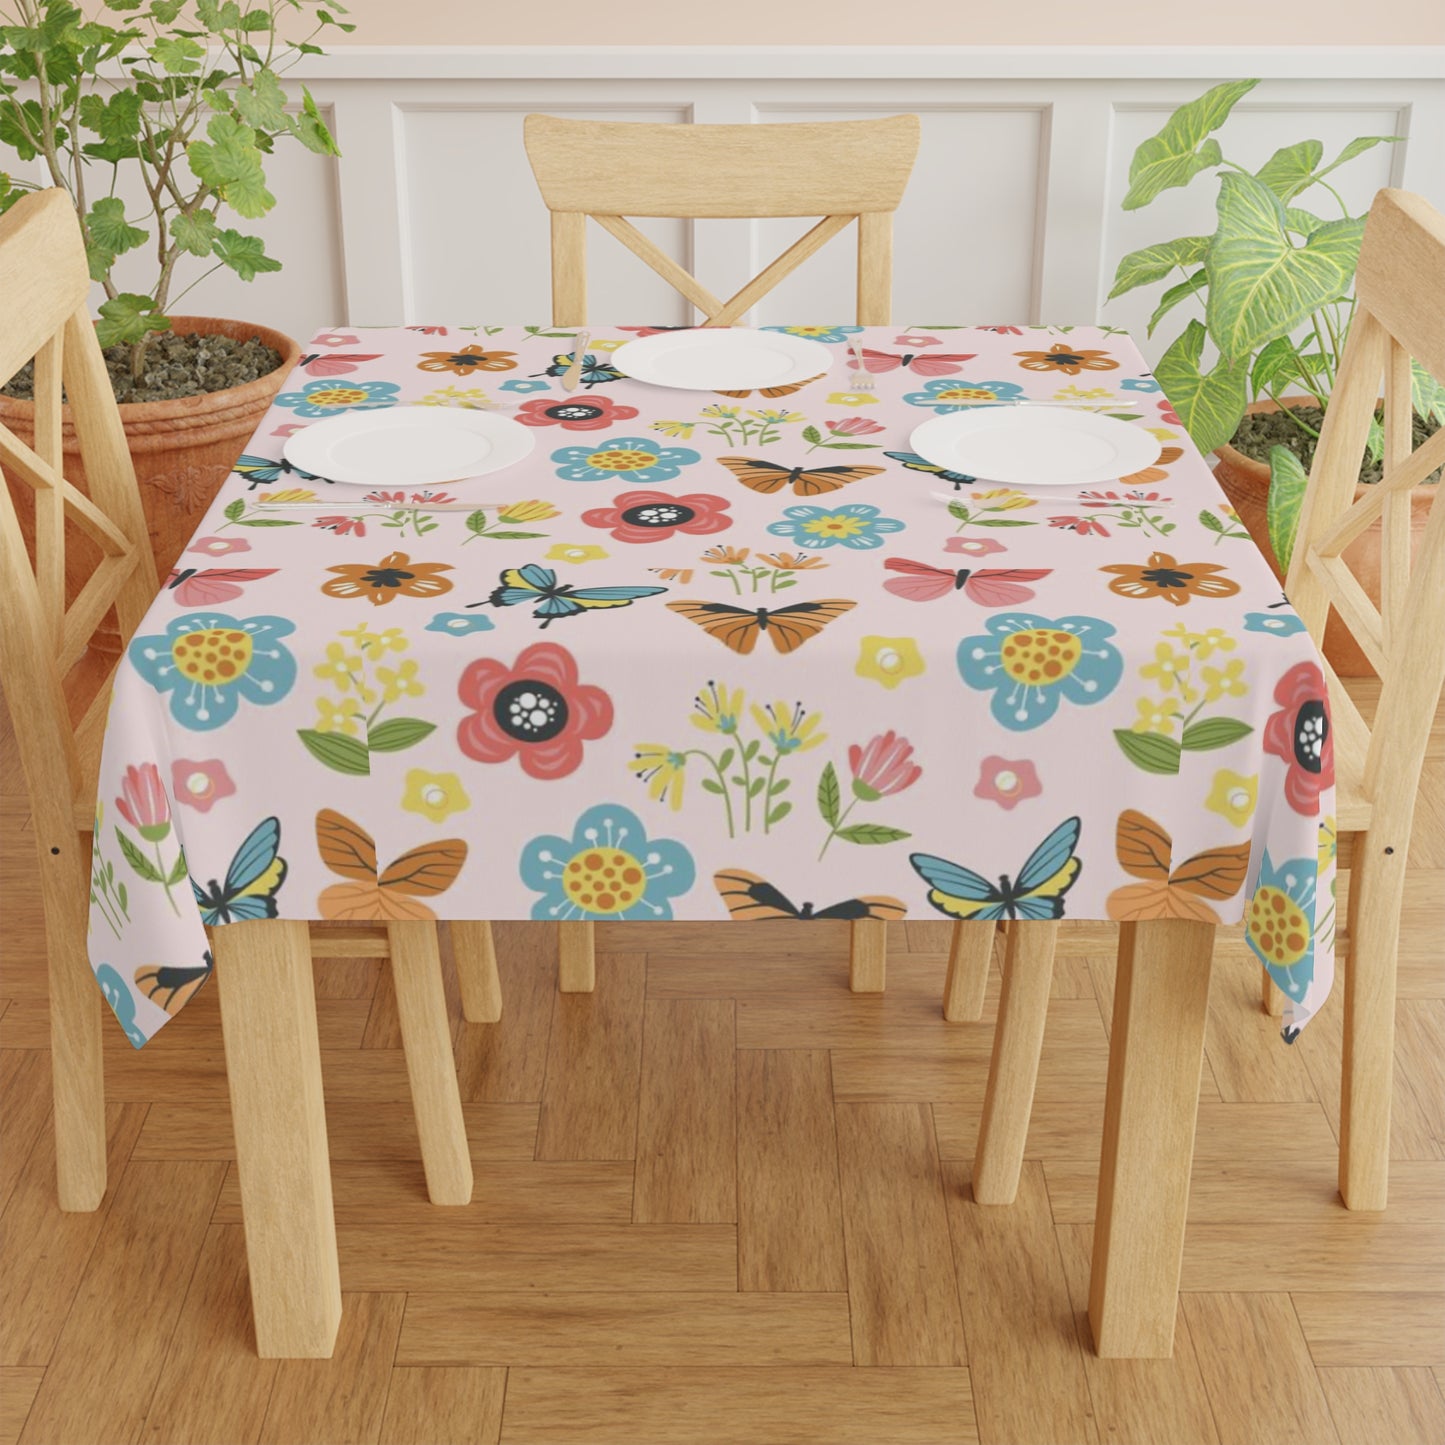 Spring Tablecloth